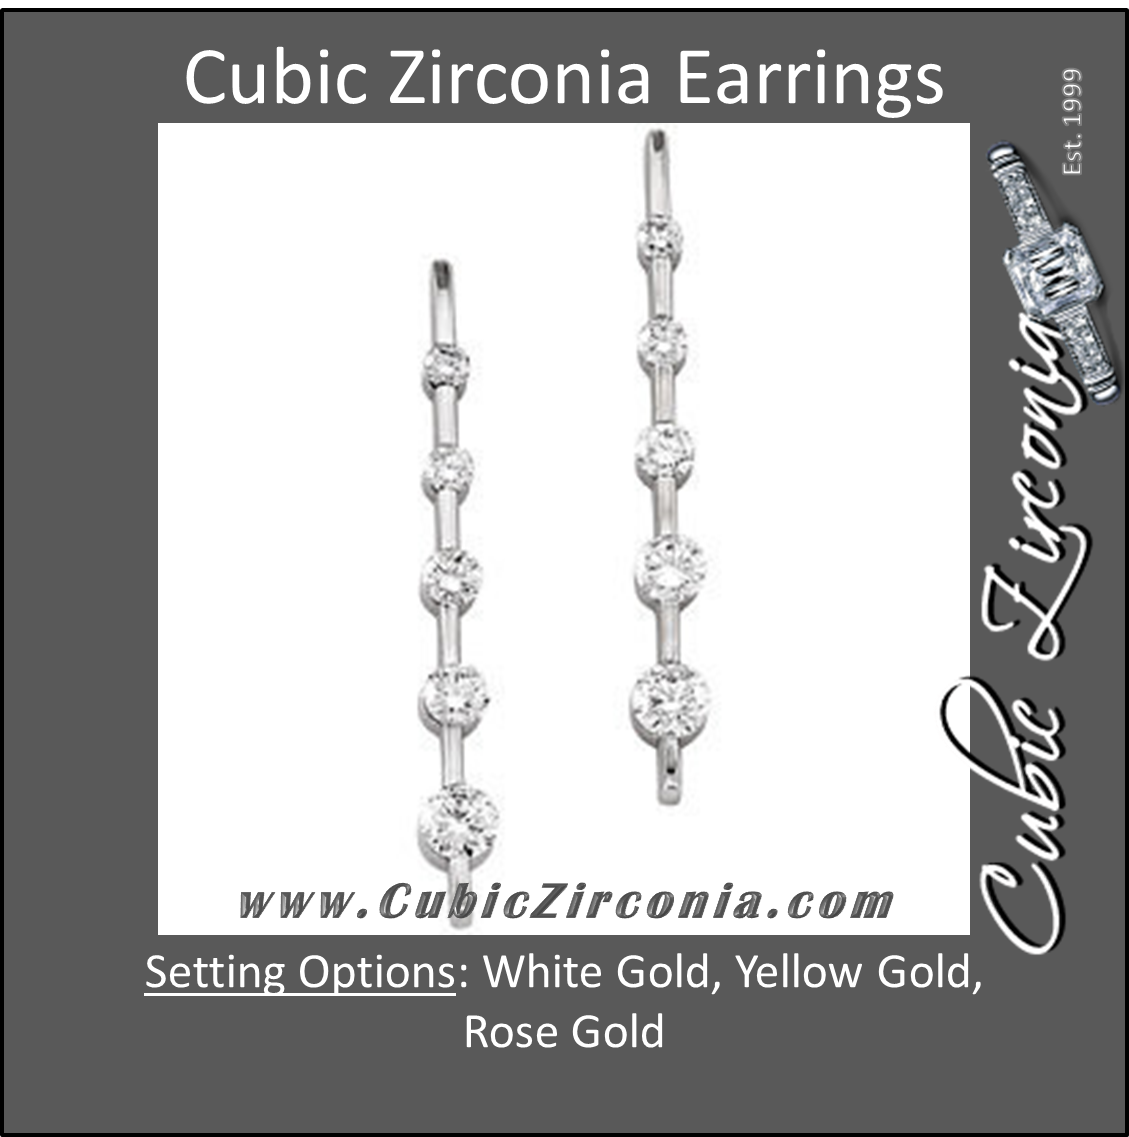 Cubic Zirconia Earrings- Journey Graduated 5-Stone Bar